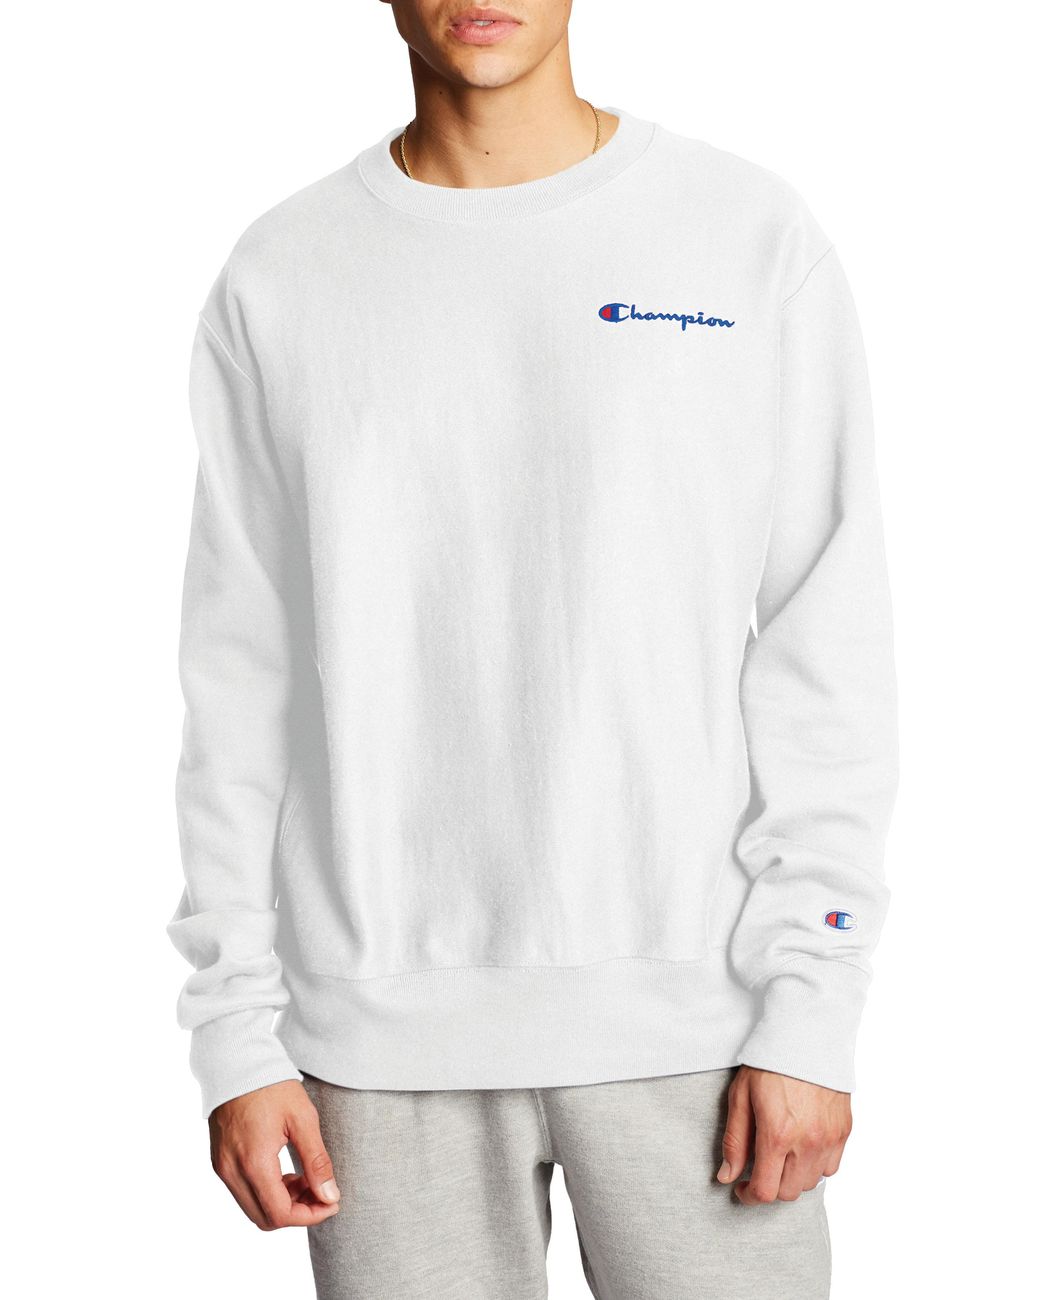 Champion Cotton Reverse Weave Crewneck Sweatshirt in White for Men - Lyst